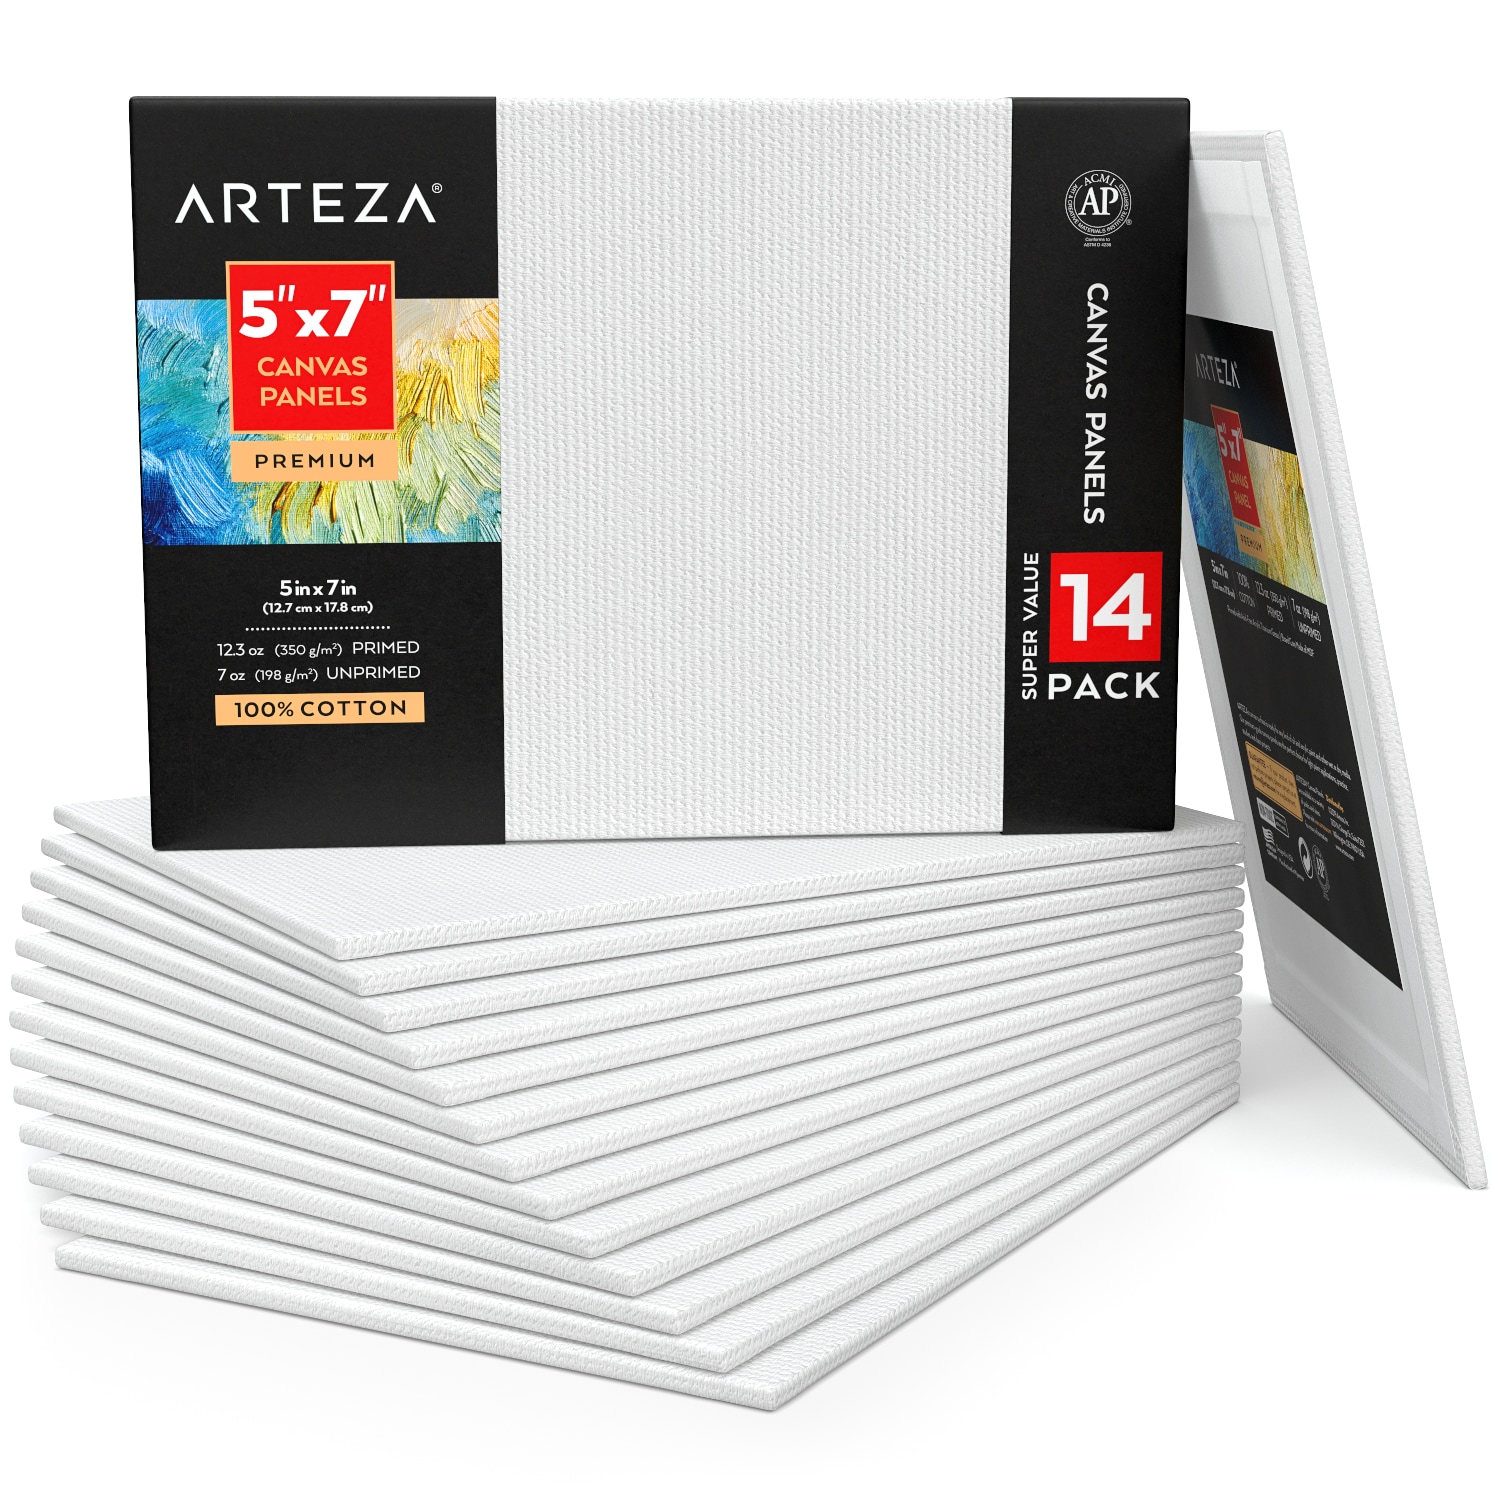 ARTEZA Arteza Canvas Panels, Premium, White, 5x7, Blank Canvas